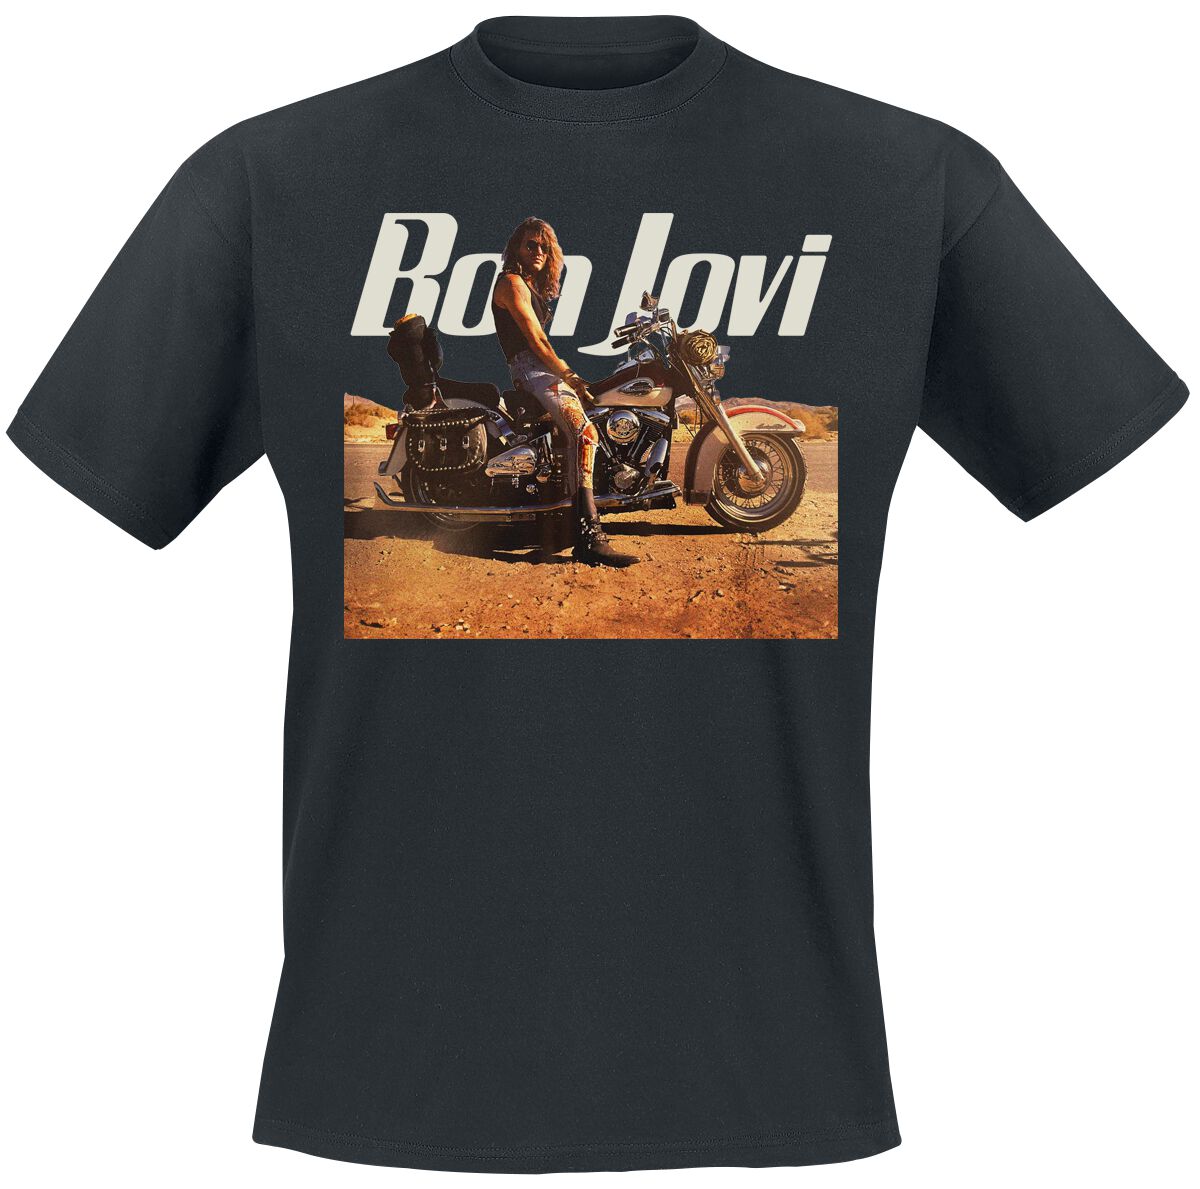 bon jovi t-shirt - wanted - s bis 3xl - fÃ¼r mÃ¤nner - grÃ¶ÃŸe xl - - lizenziertes merchandise! schwarz